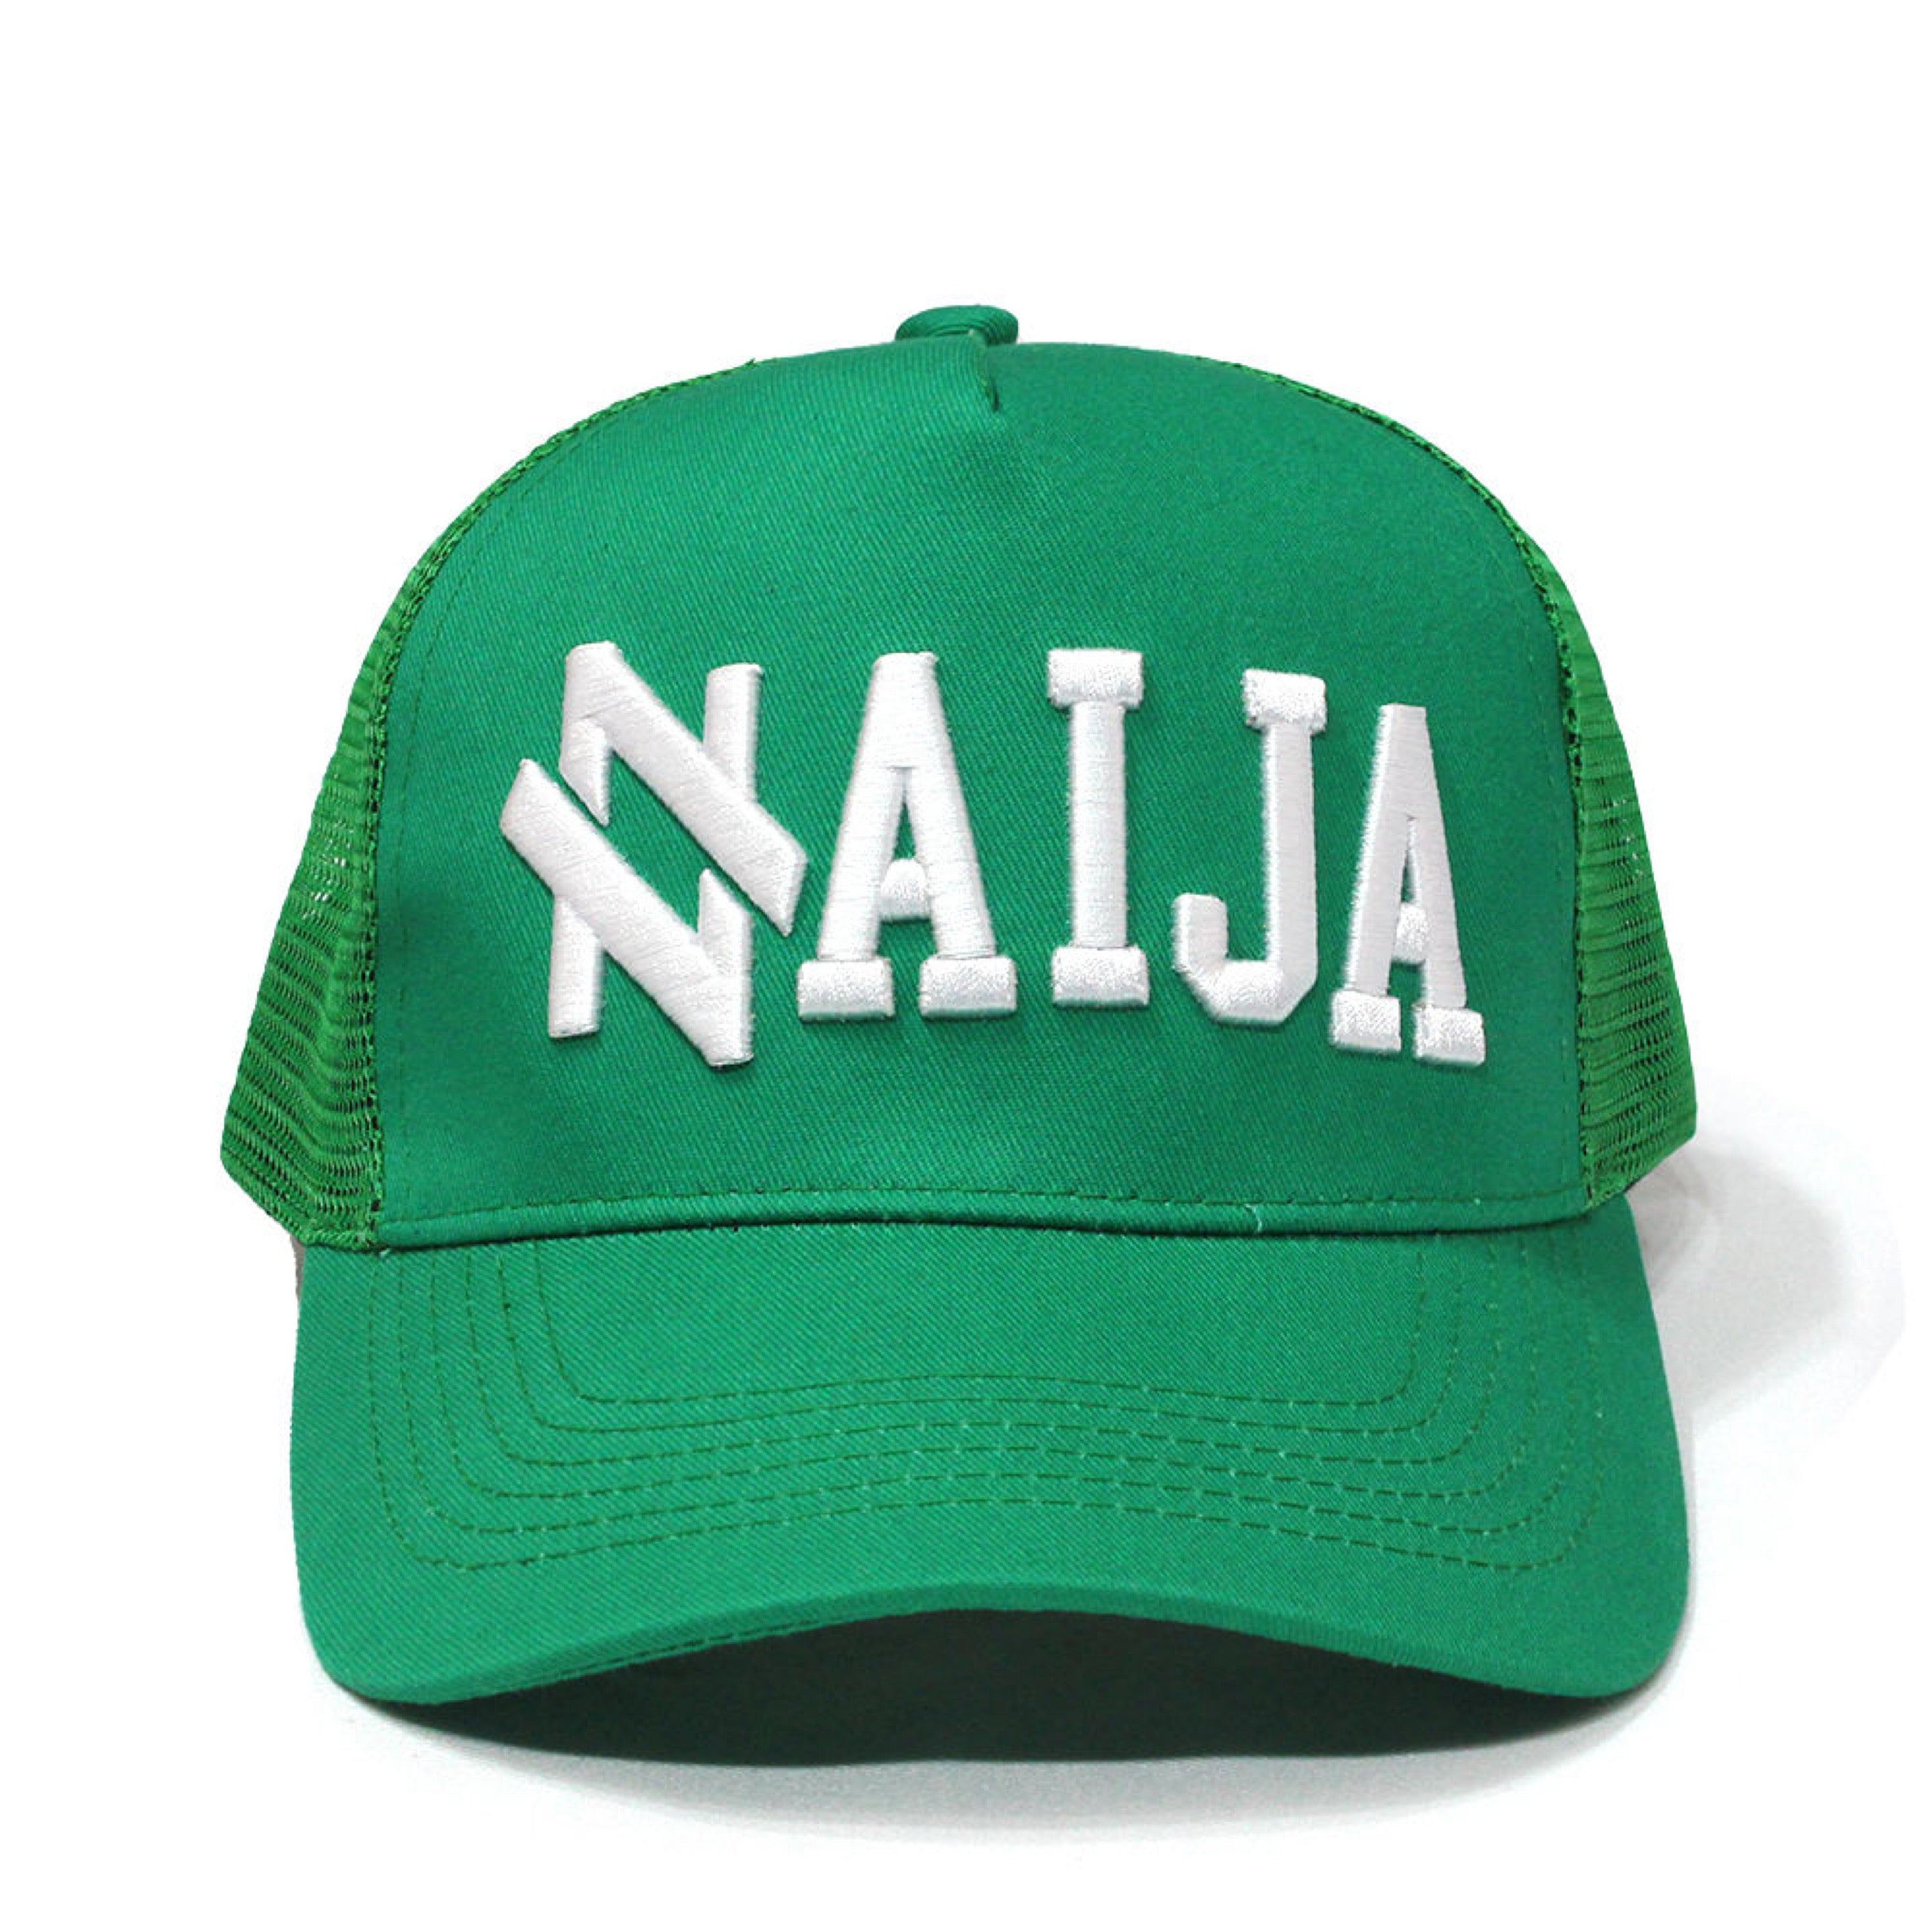 The Naija Nation Trucker Hat